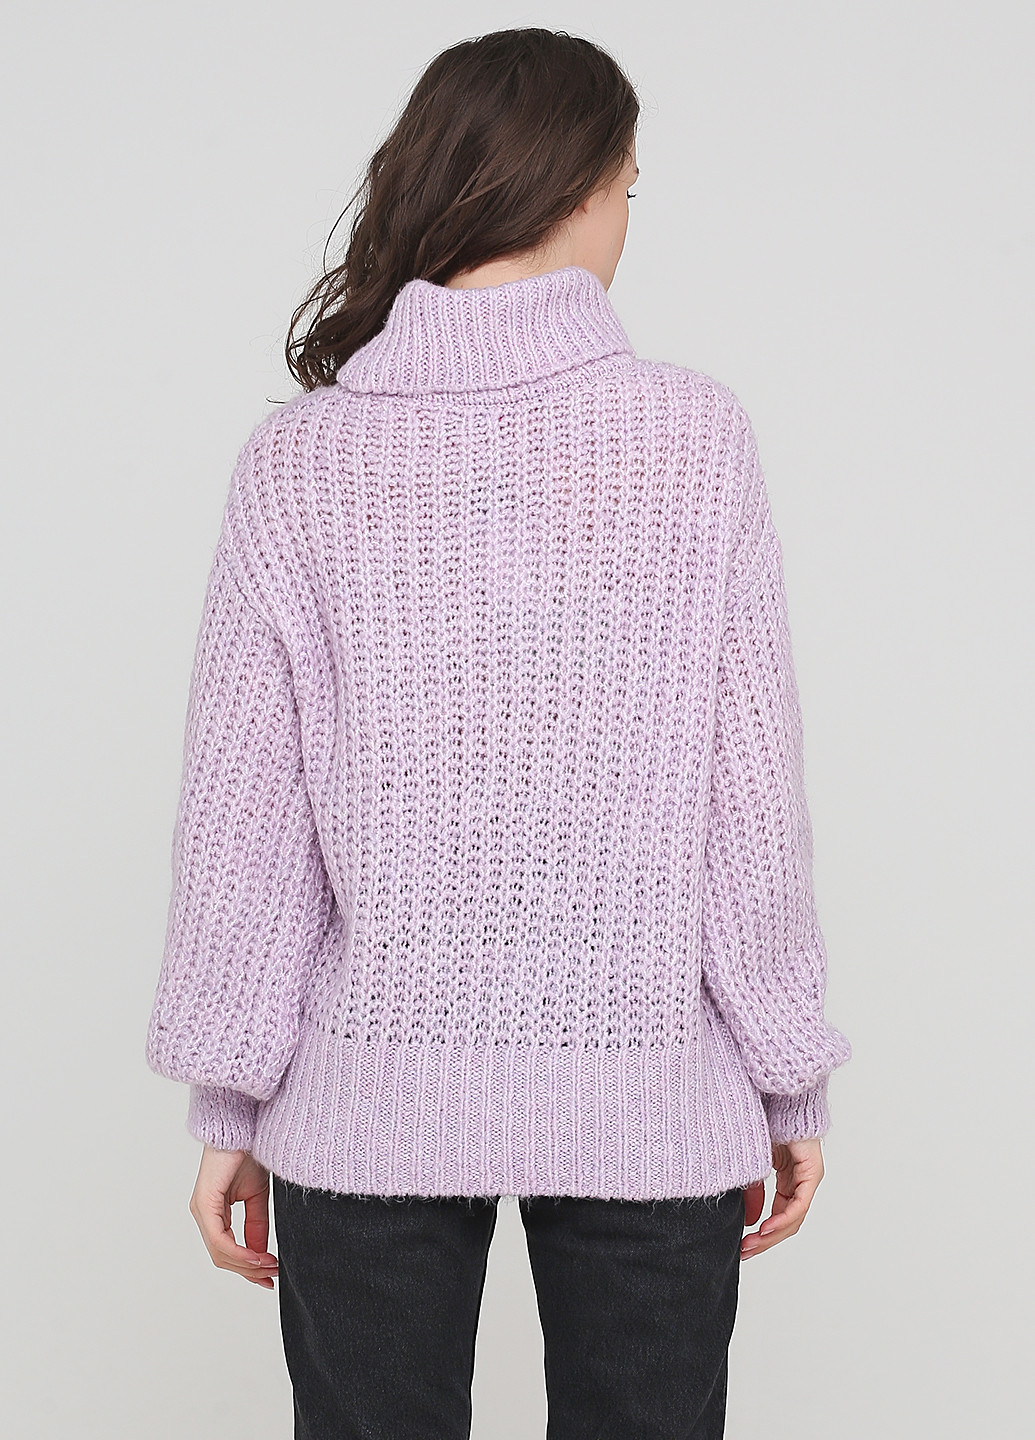 Сиреневый демисезонный свитер Mixray